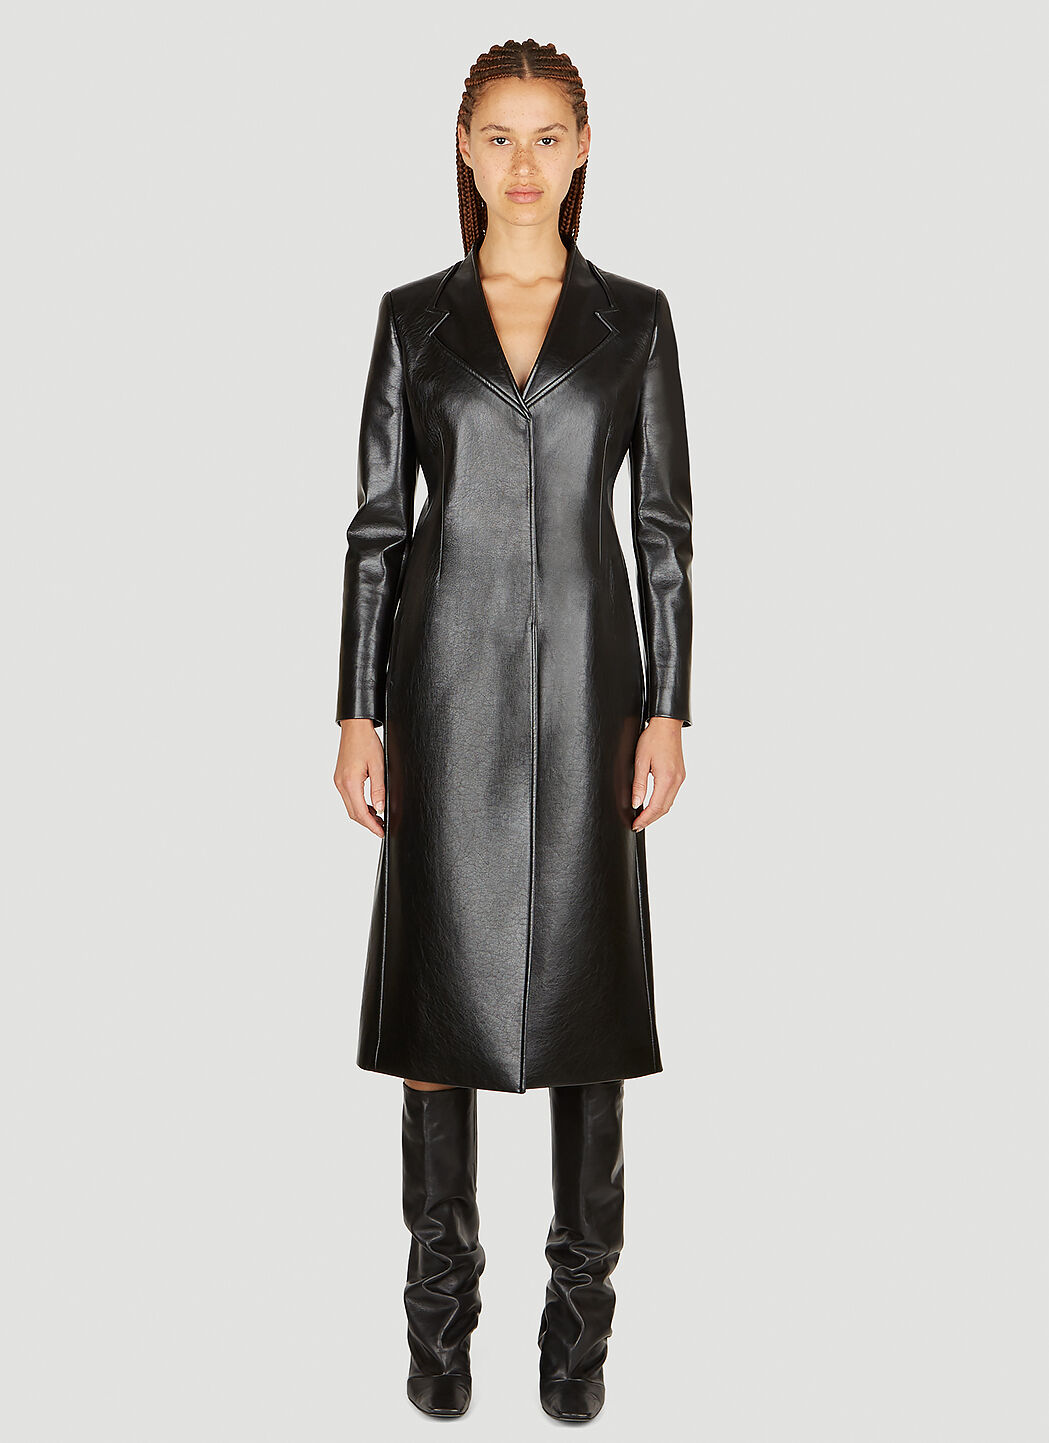 Coperni Trompe-Loeil Tailored Faxu Leather Coat Black cpn0253019